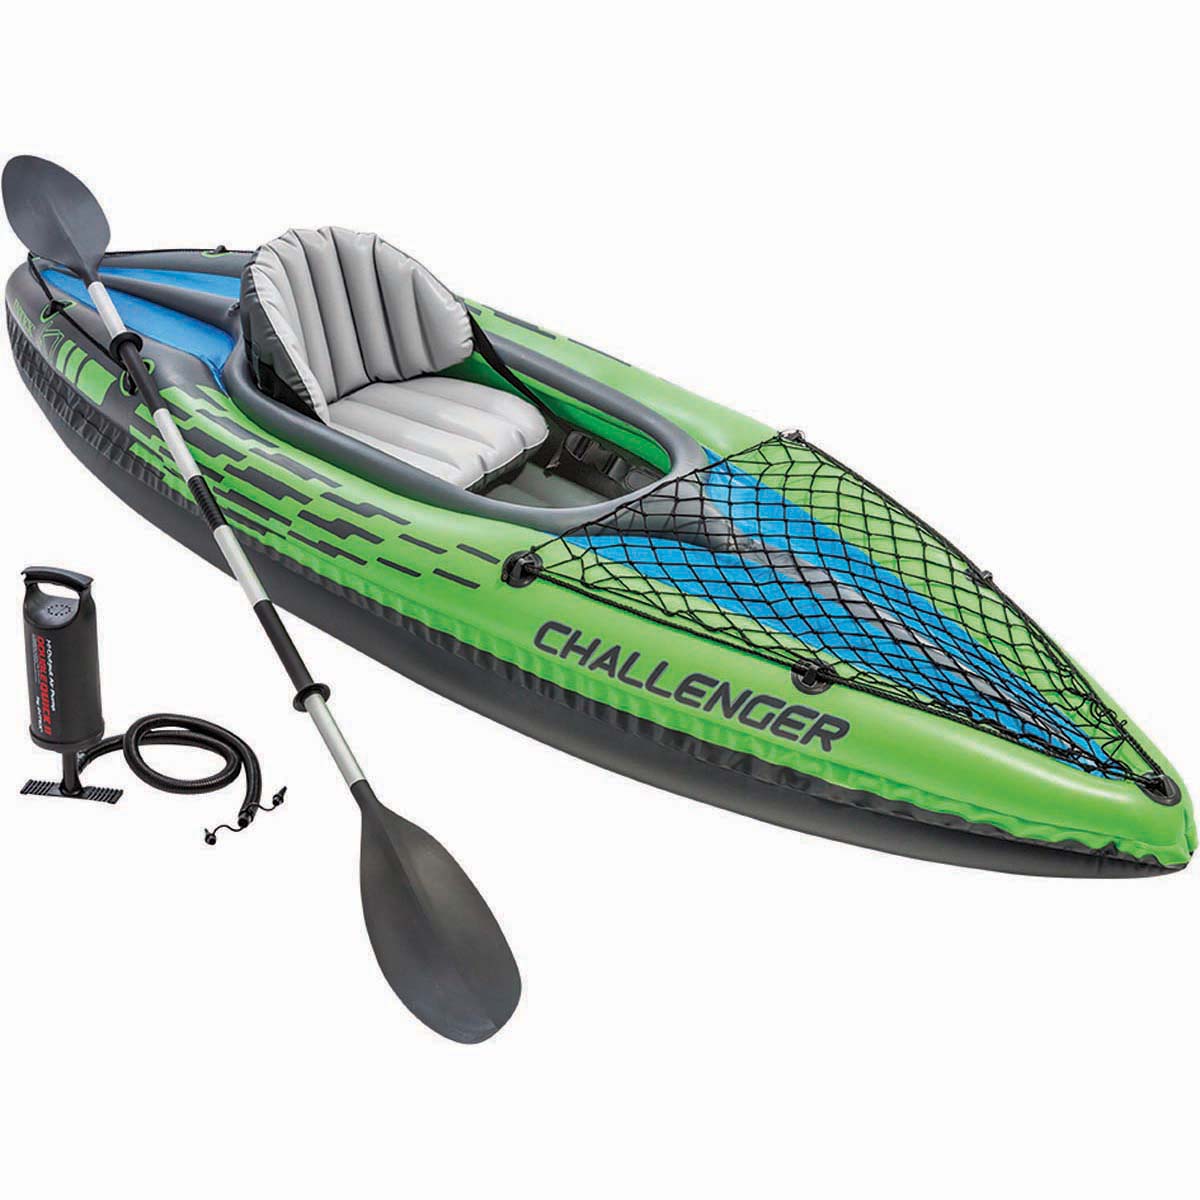 Intex Inflatable Challenger Kayak - 1 Person